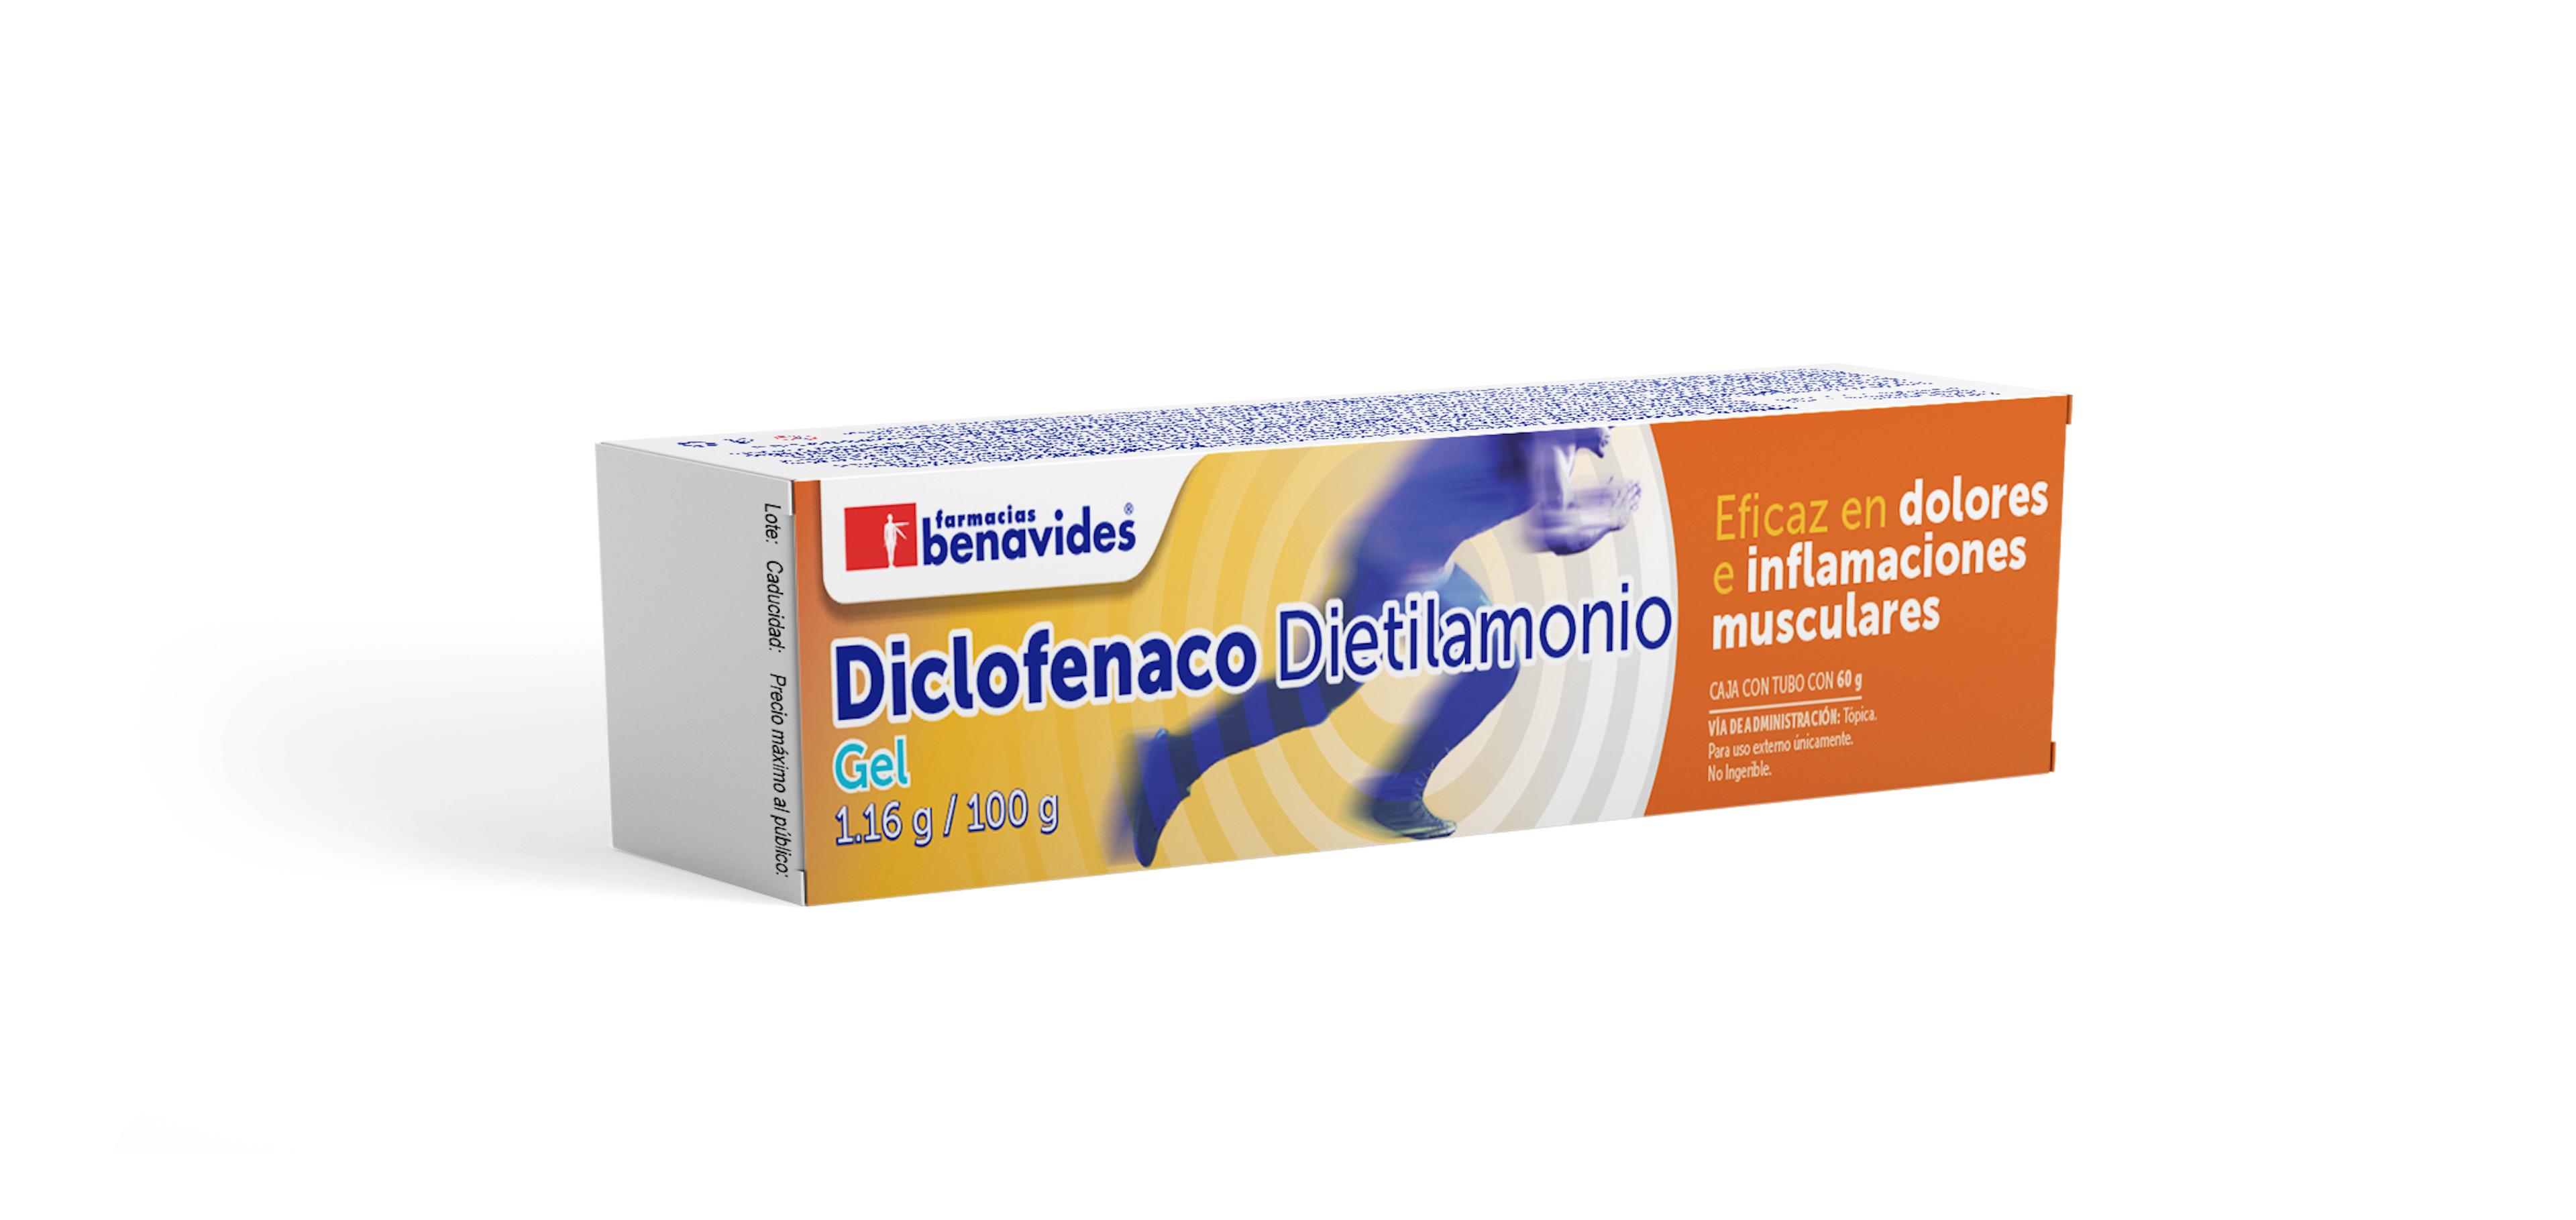 Diclofenaco Dietilamonio Gel